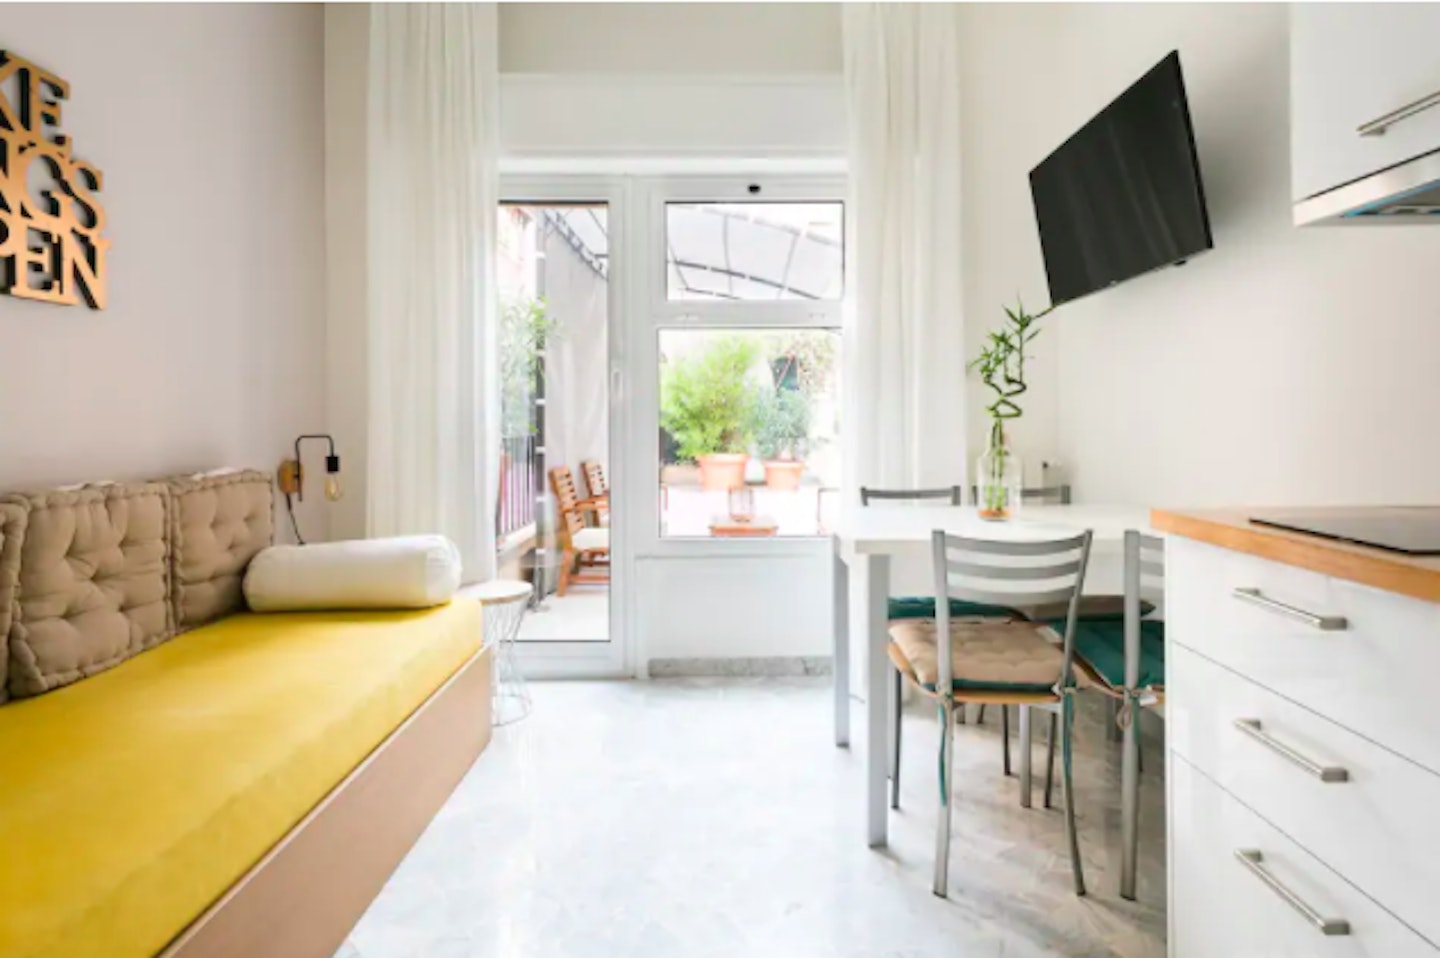 Best Discount Airbnb Long Term Rentals In Europe - Grazia